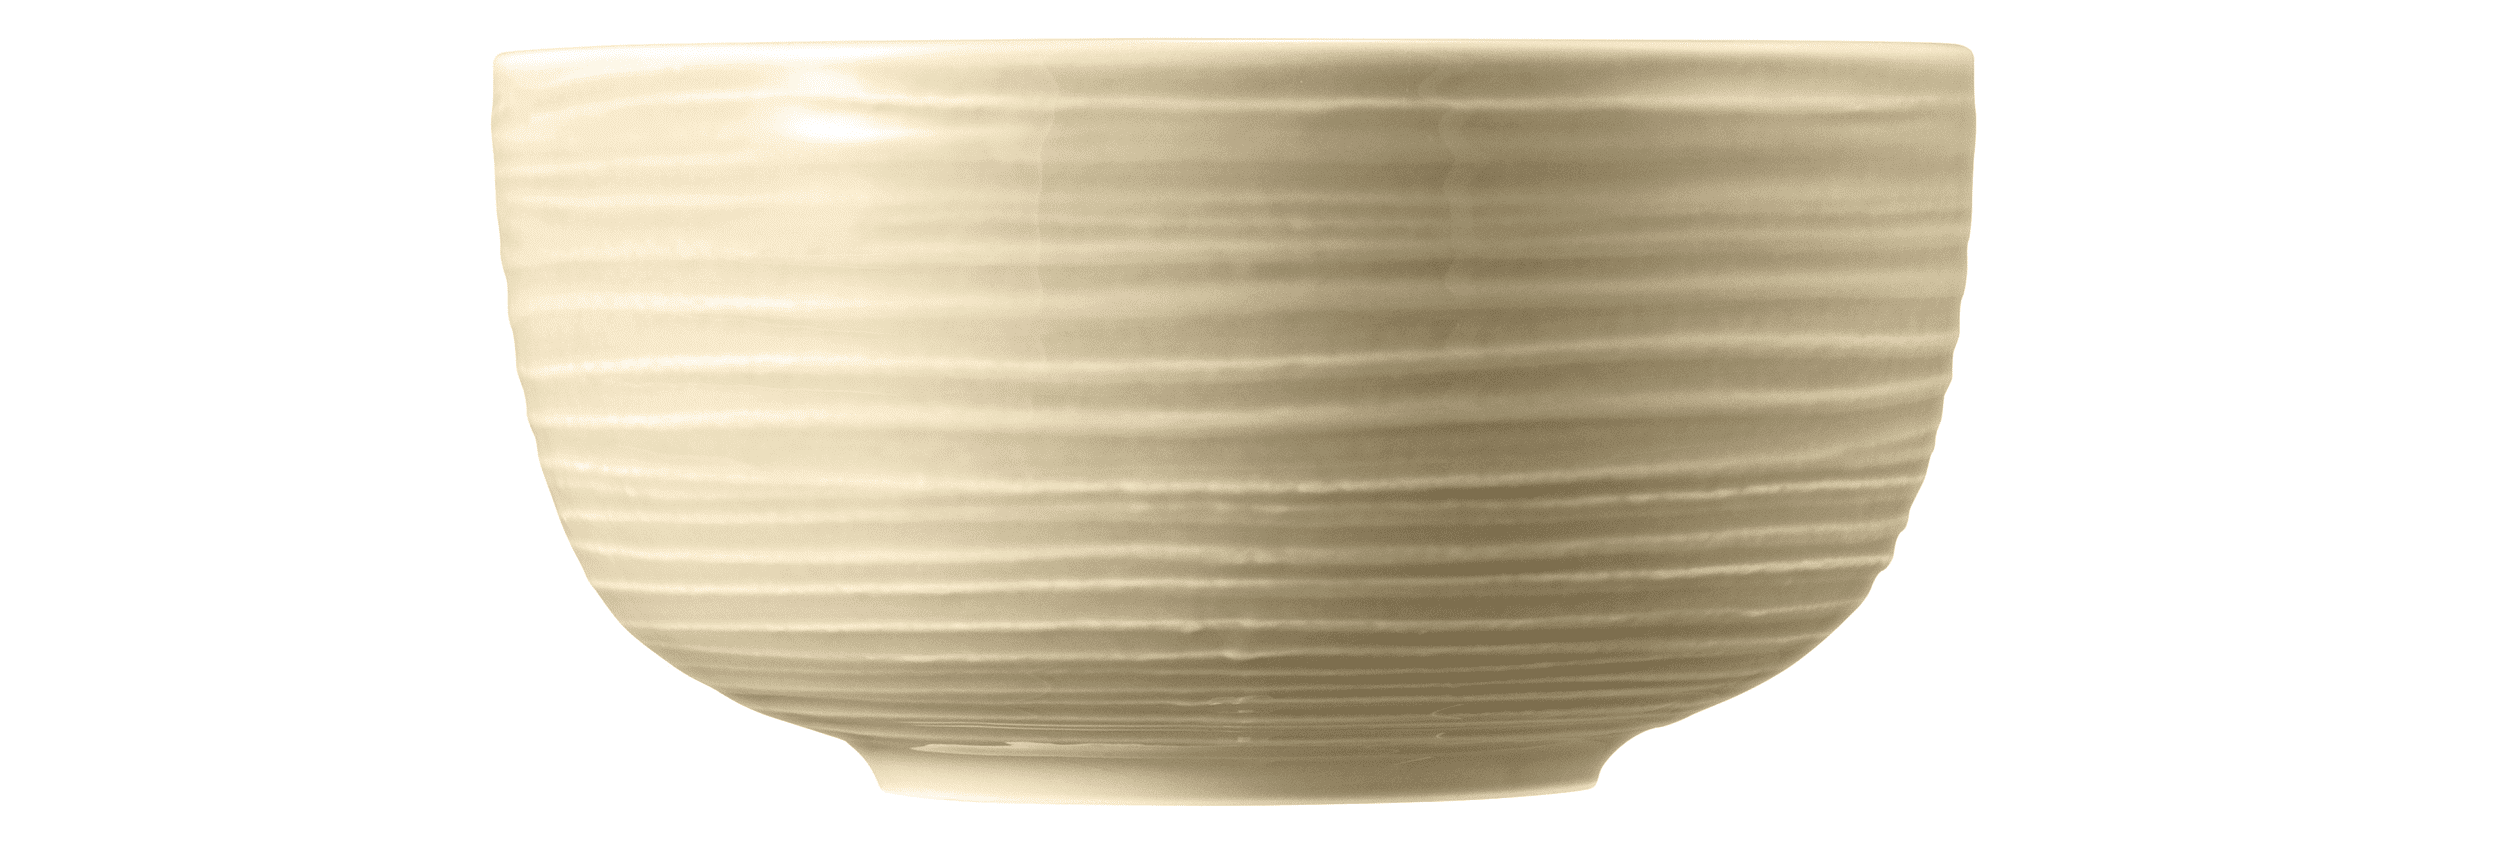 Seltmann Porzellan Terra Sandbeige Foodbowl 17,5 cm